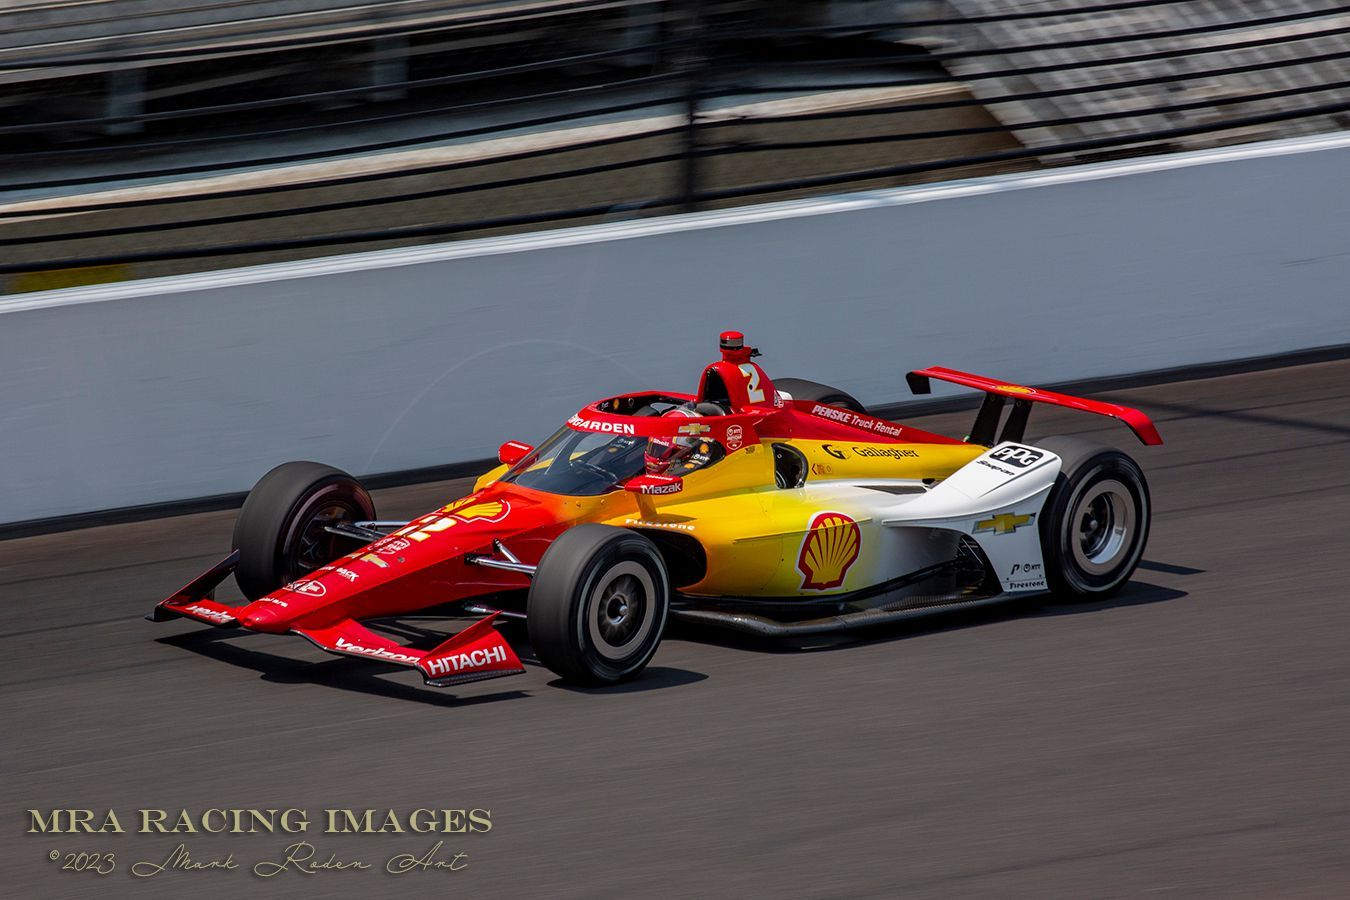 Josef Newgarden Indianapolis 500 Qualifying Procedure